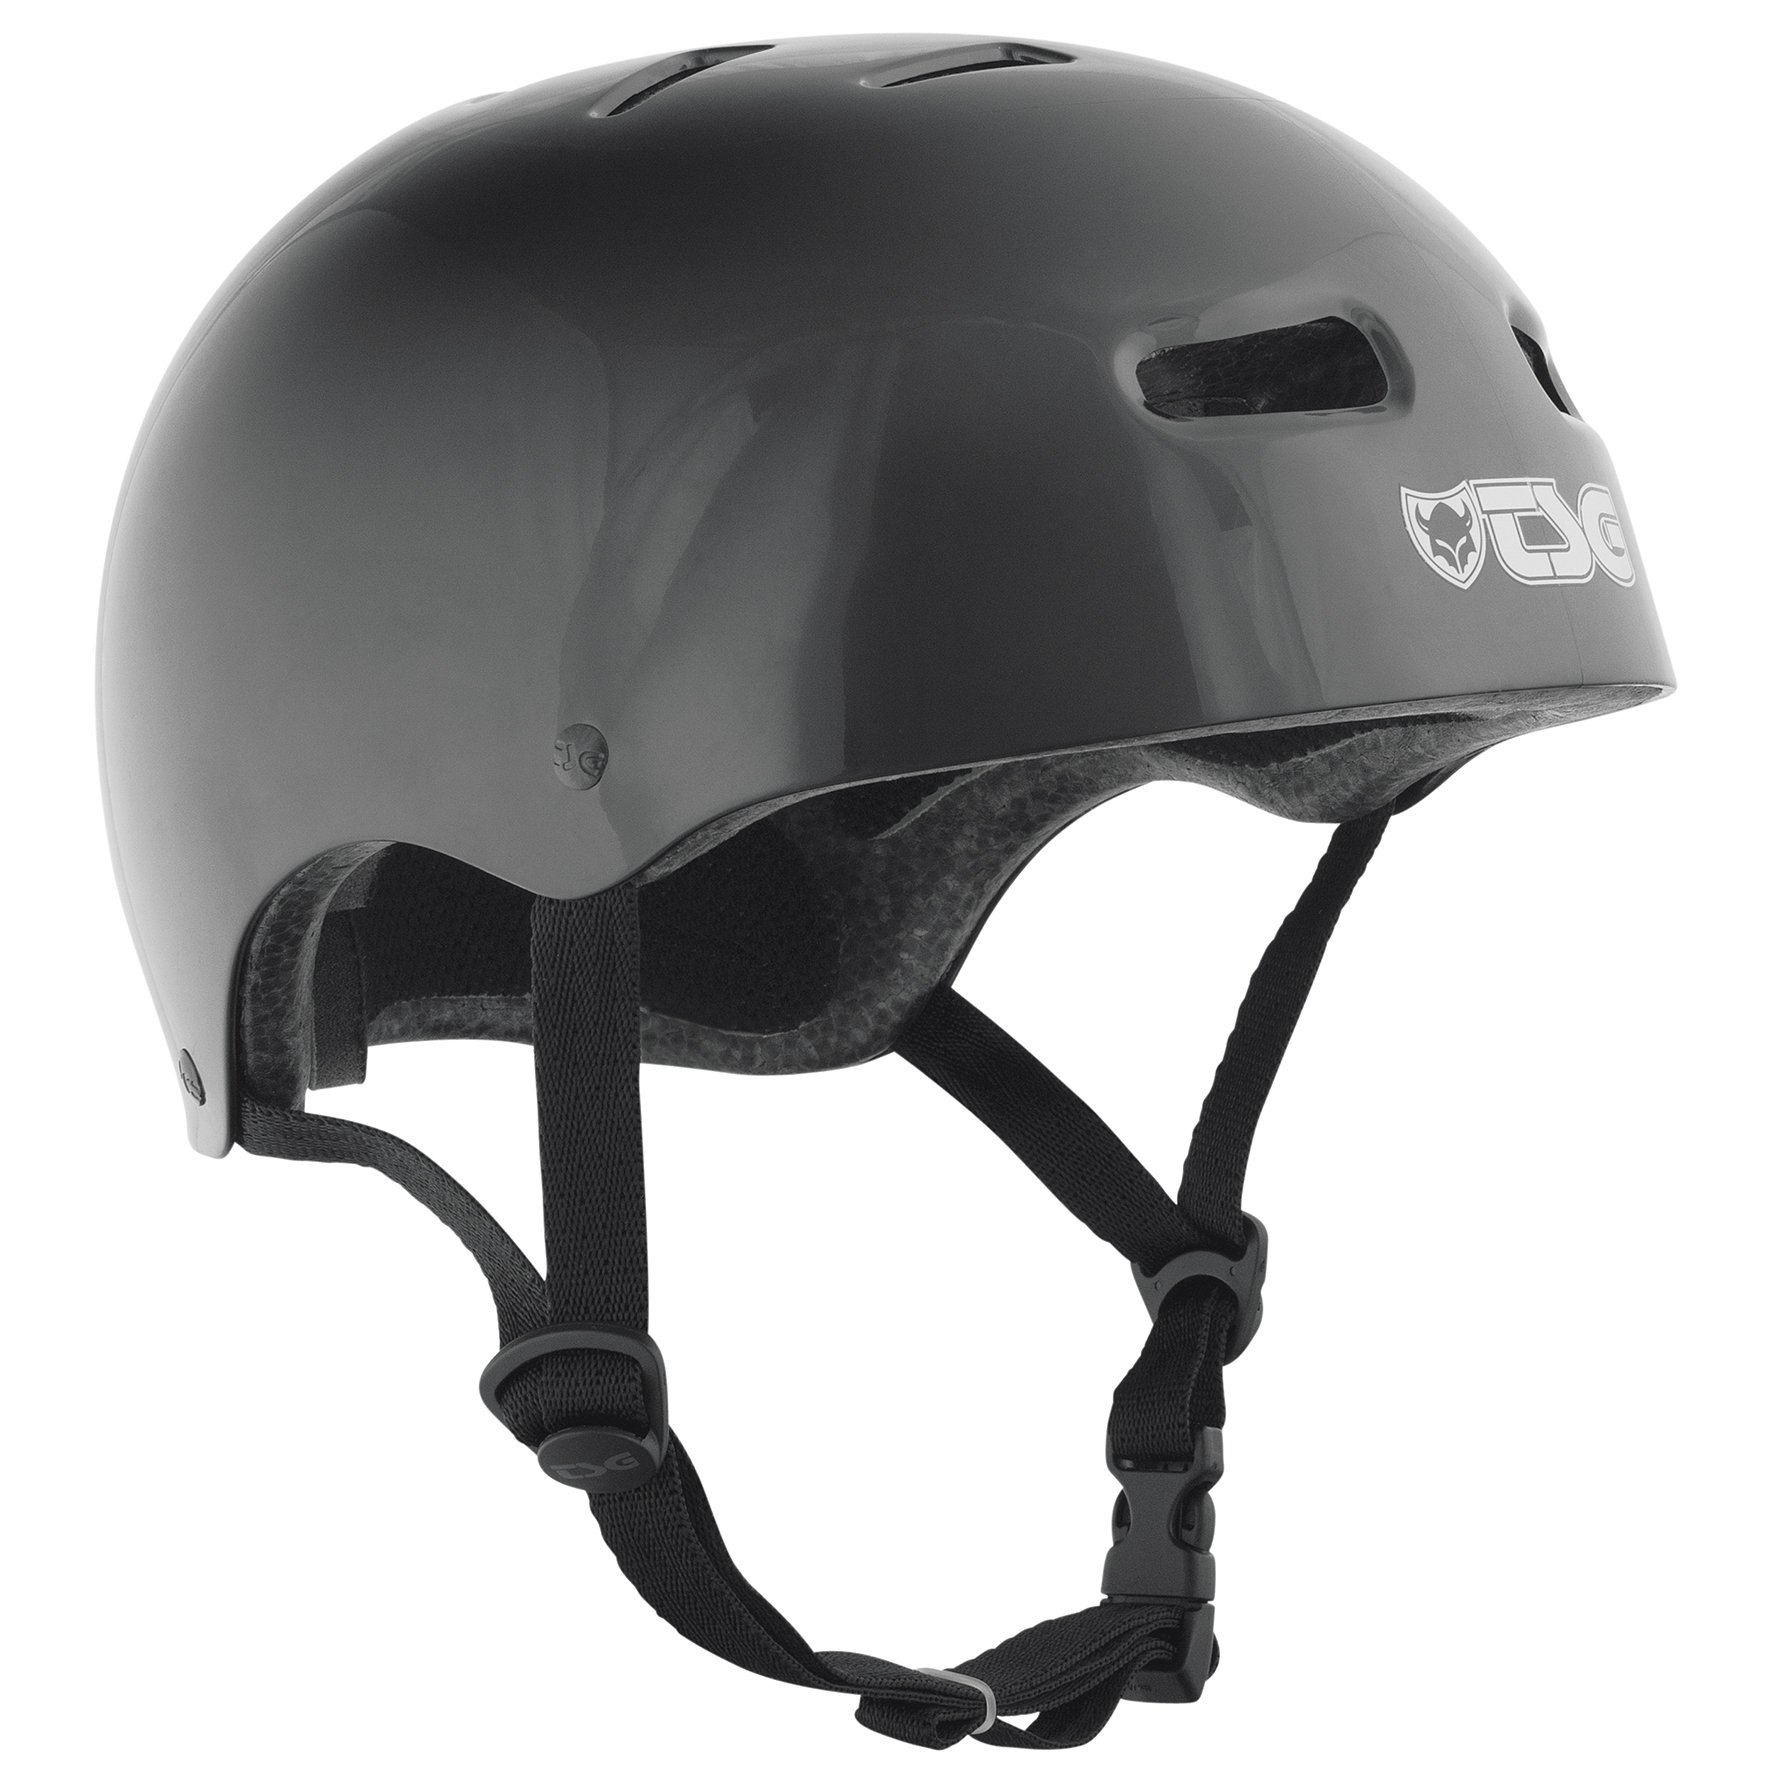 TSG - Skate/BMX Glossy Color (Glossy Black, S/M 54-56 cm) Helmet for Bicycle Skateboard